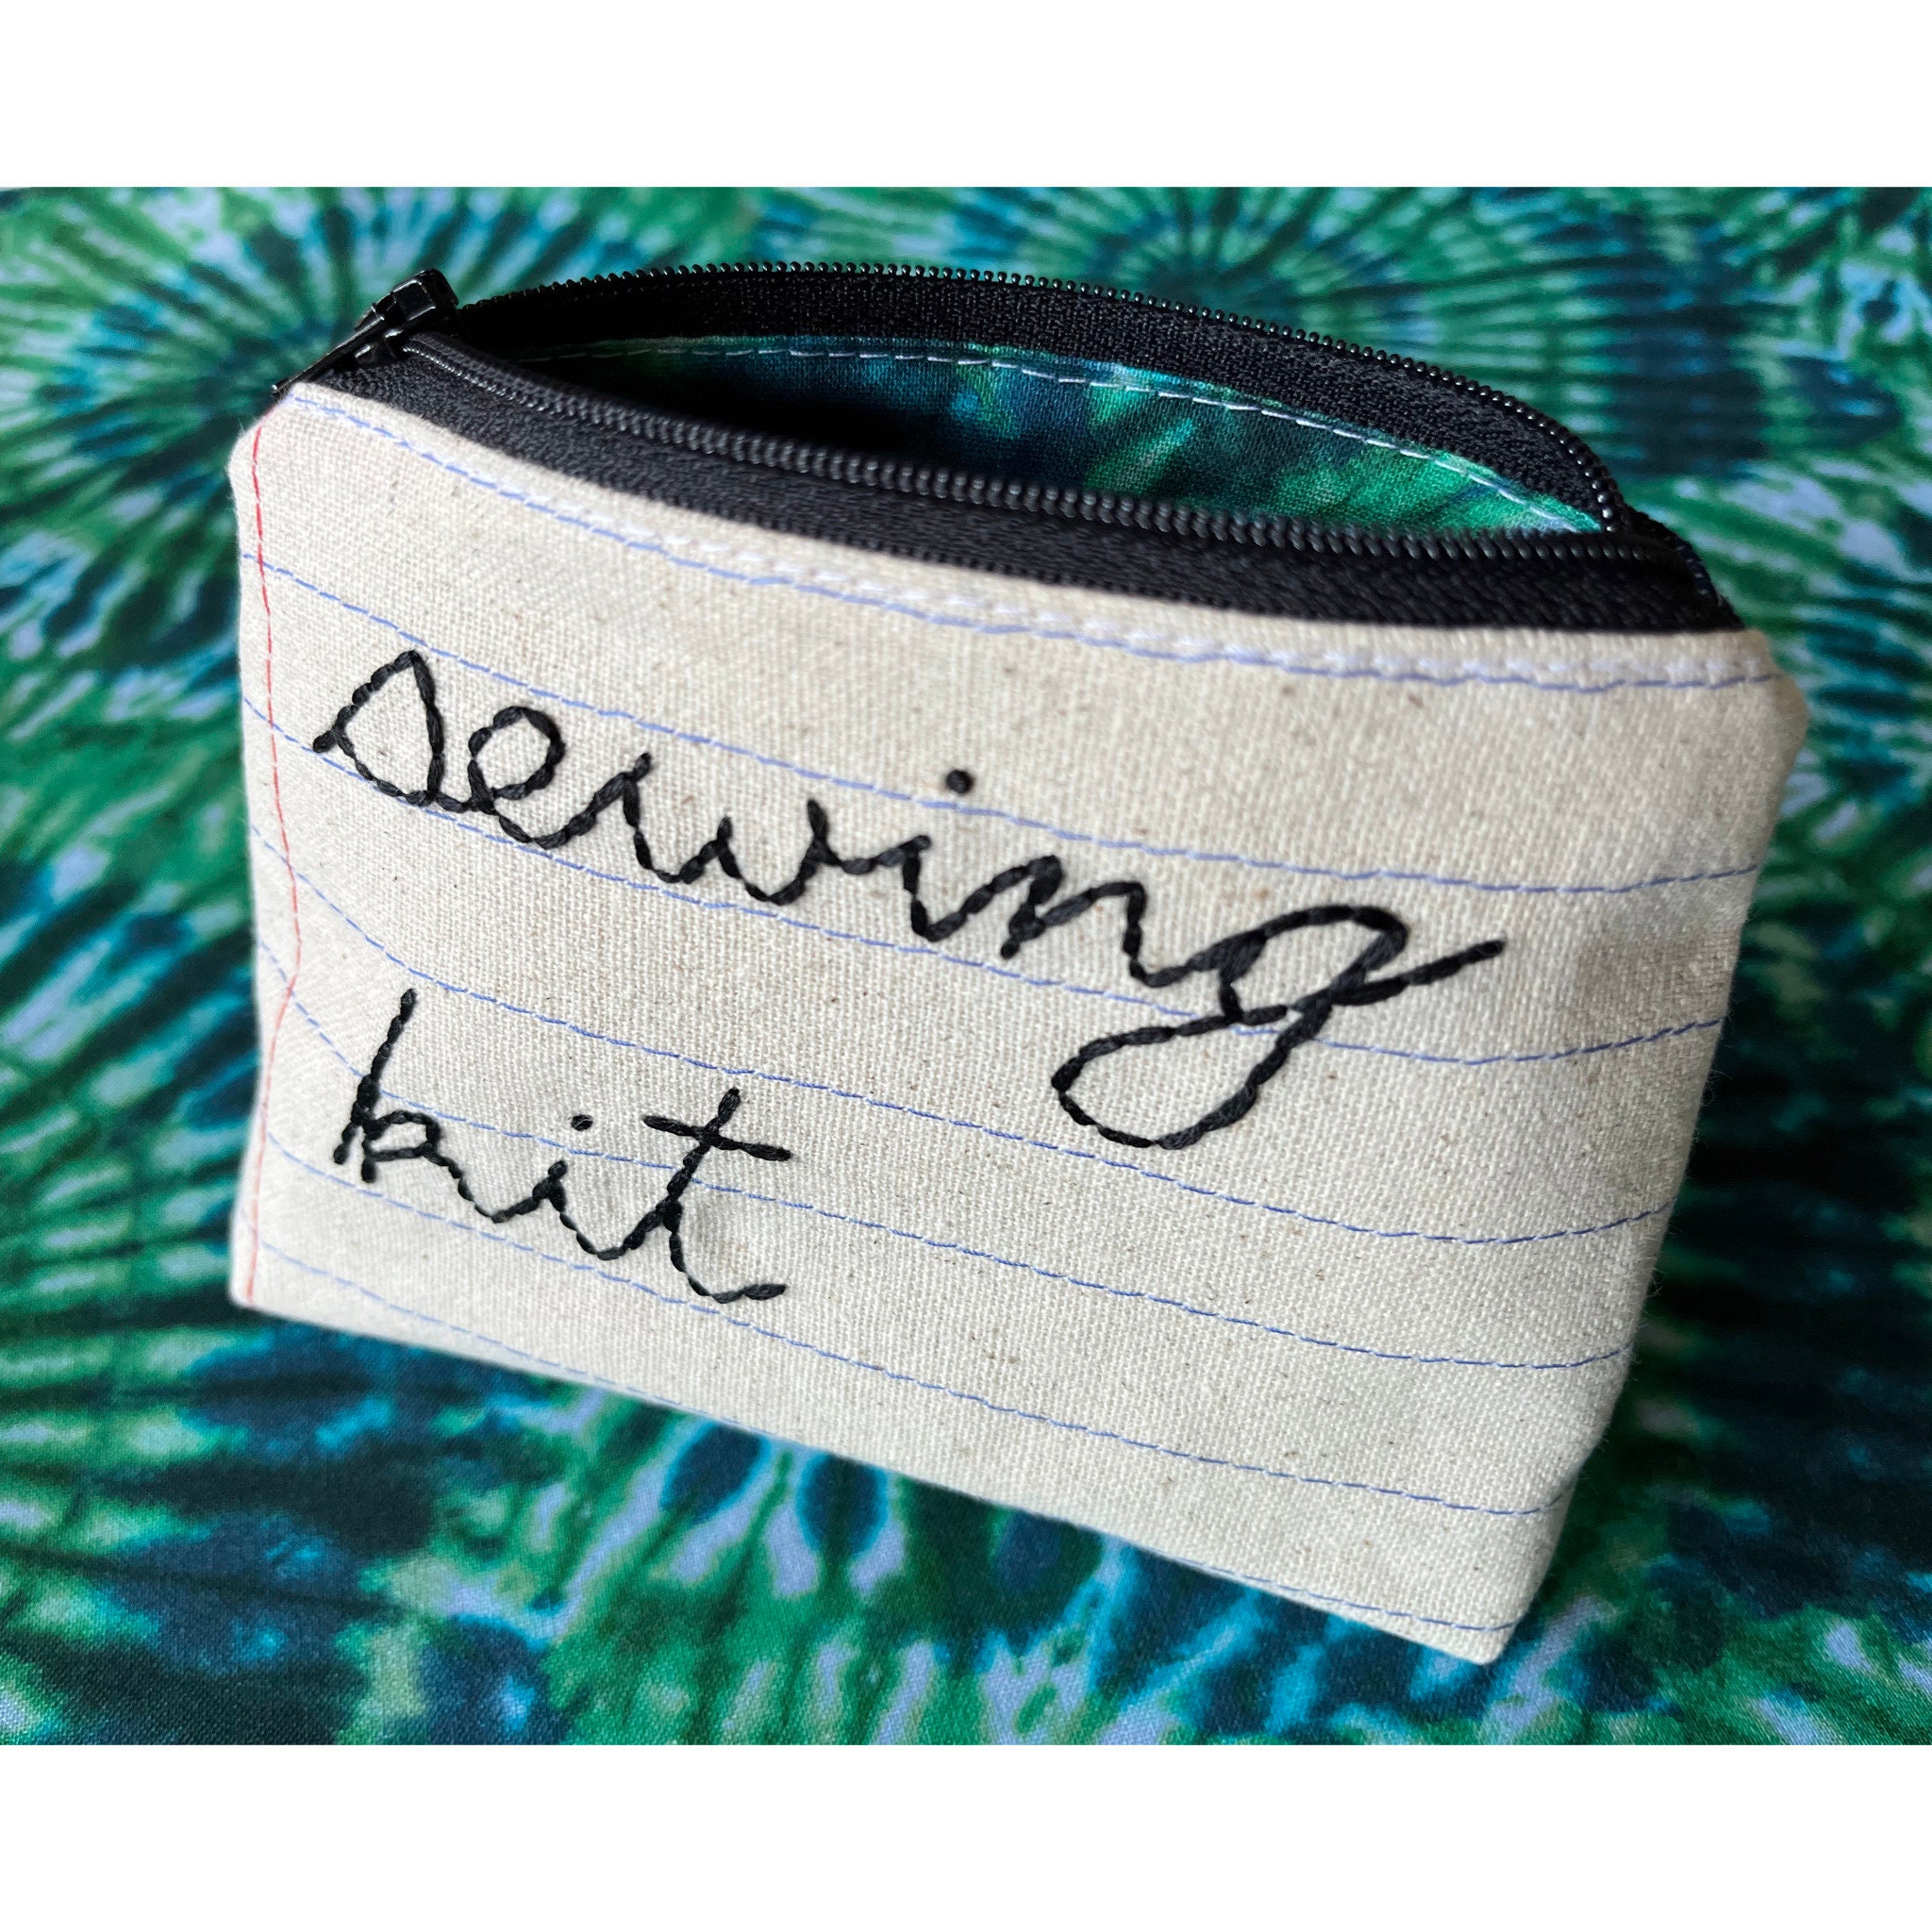 LARGE SEWING KIT professional Sewing Kit Thread Scissor Tape Pins